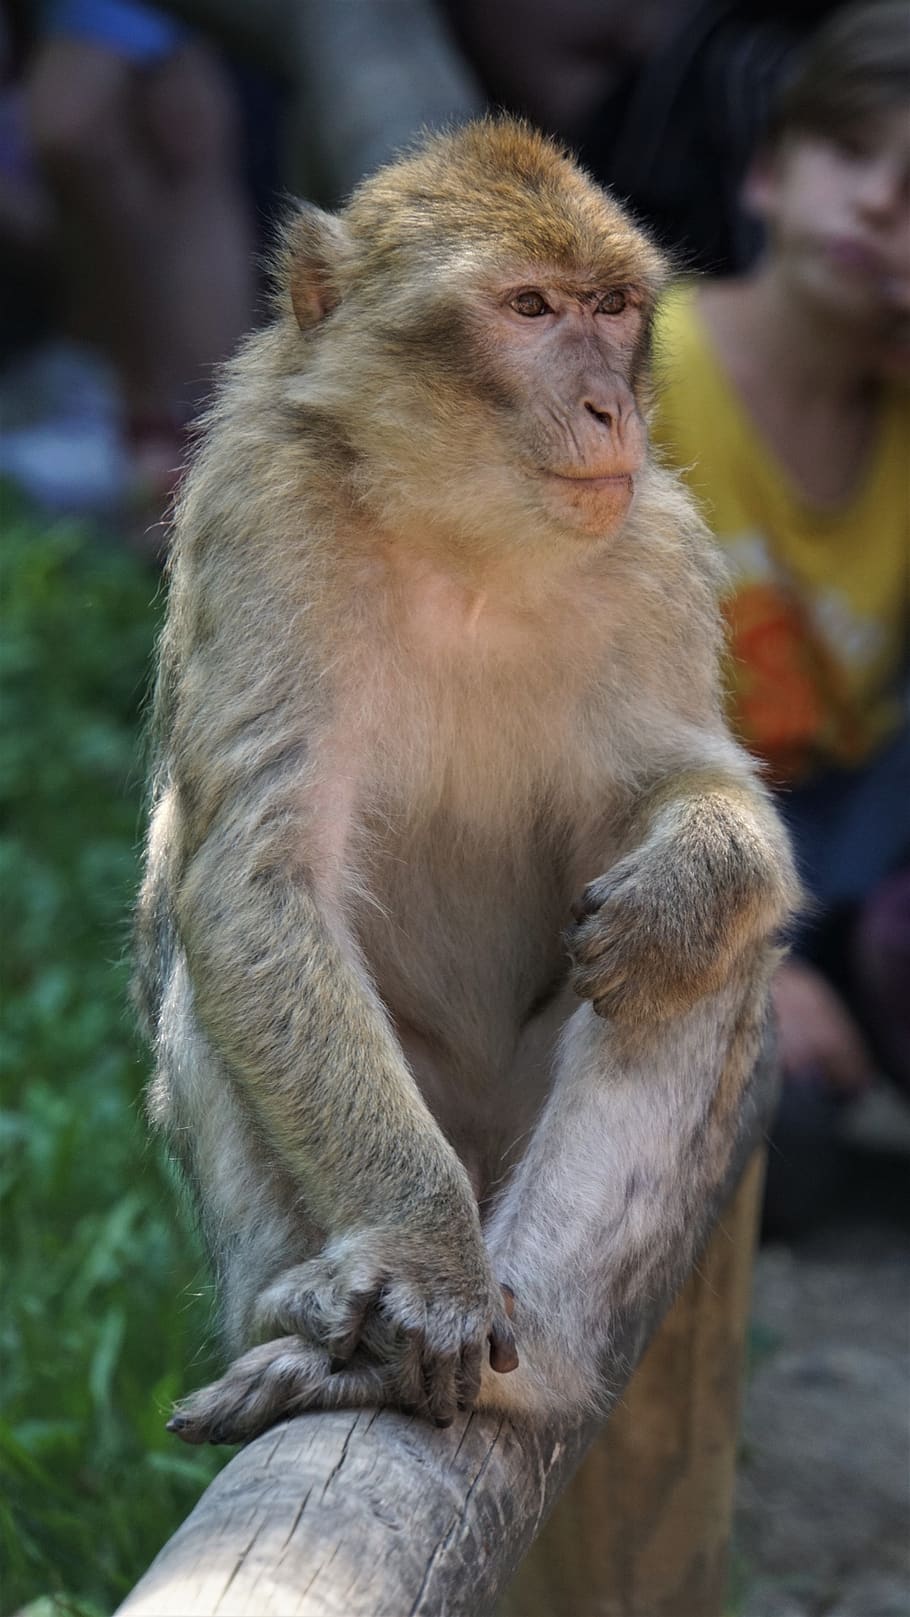 barbary ape, äffchen, visitors, children, audience, monkey mountain salem, animal, sweet, cute, fur